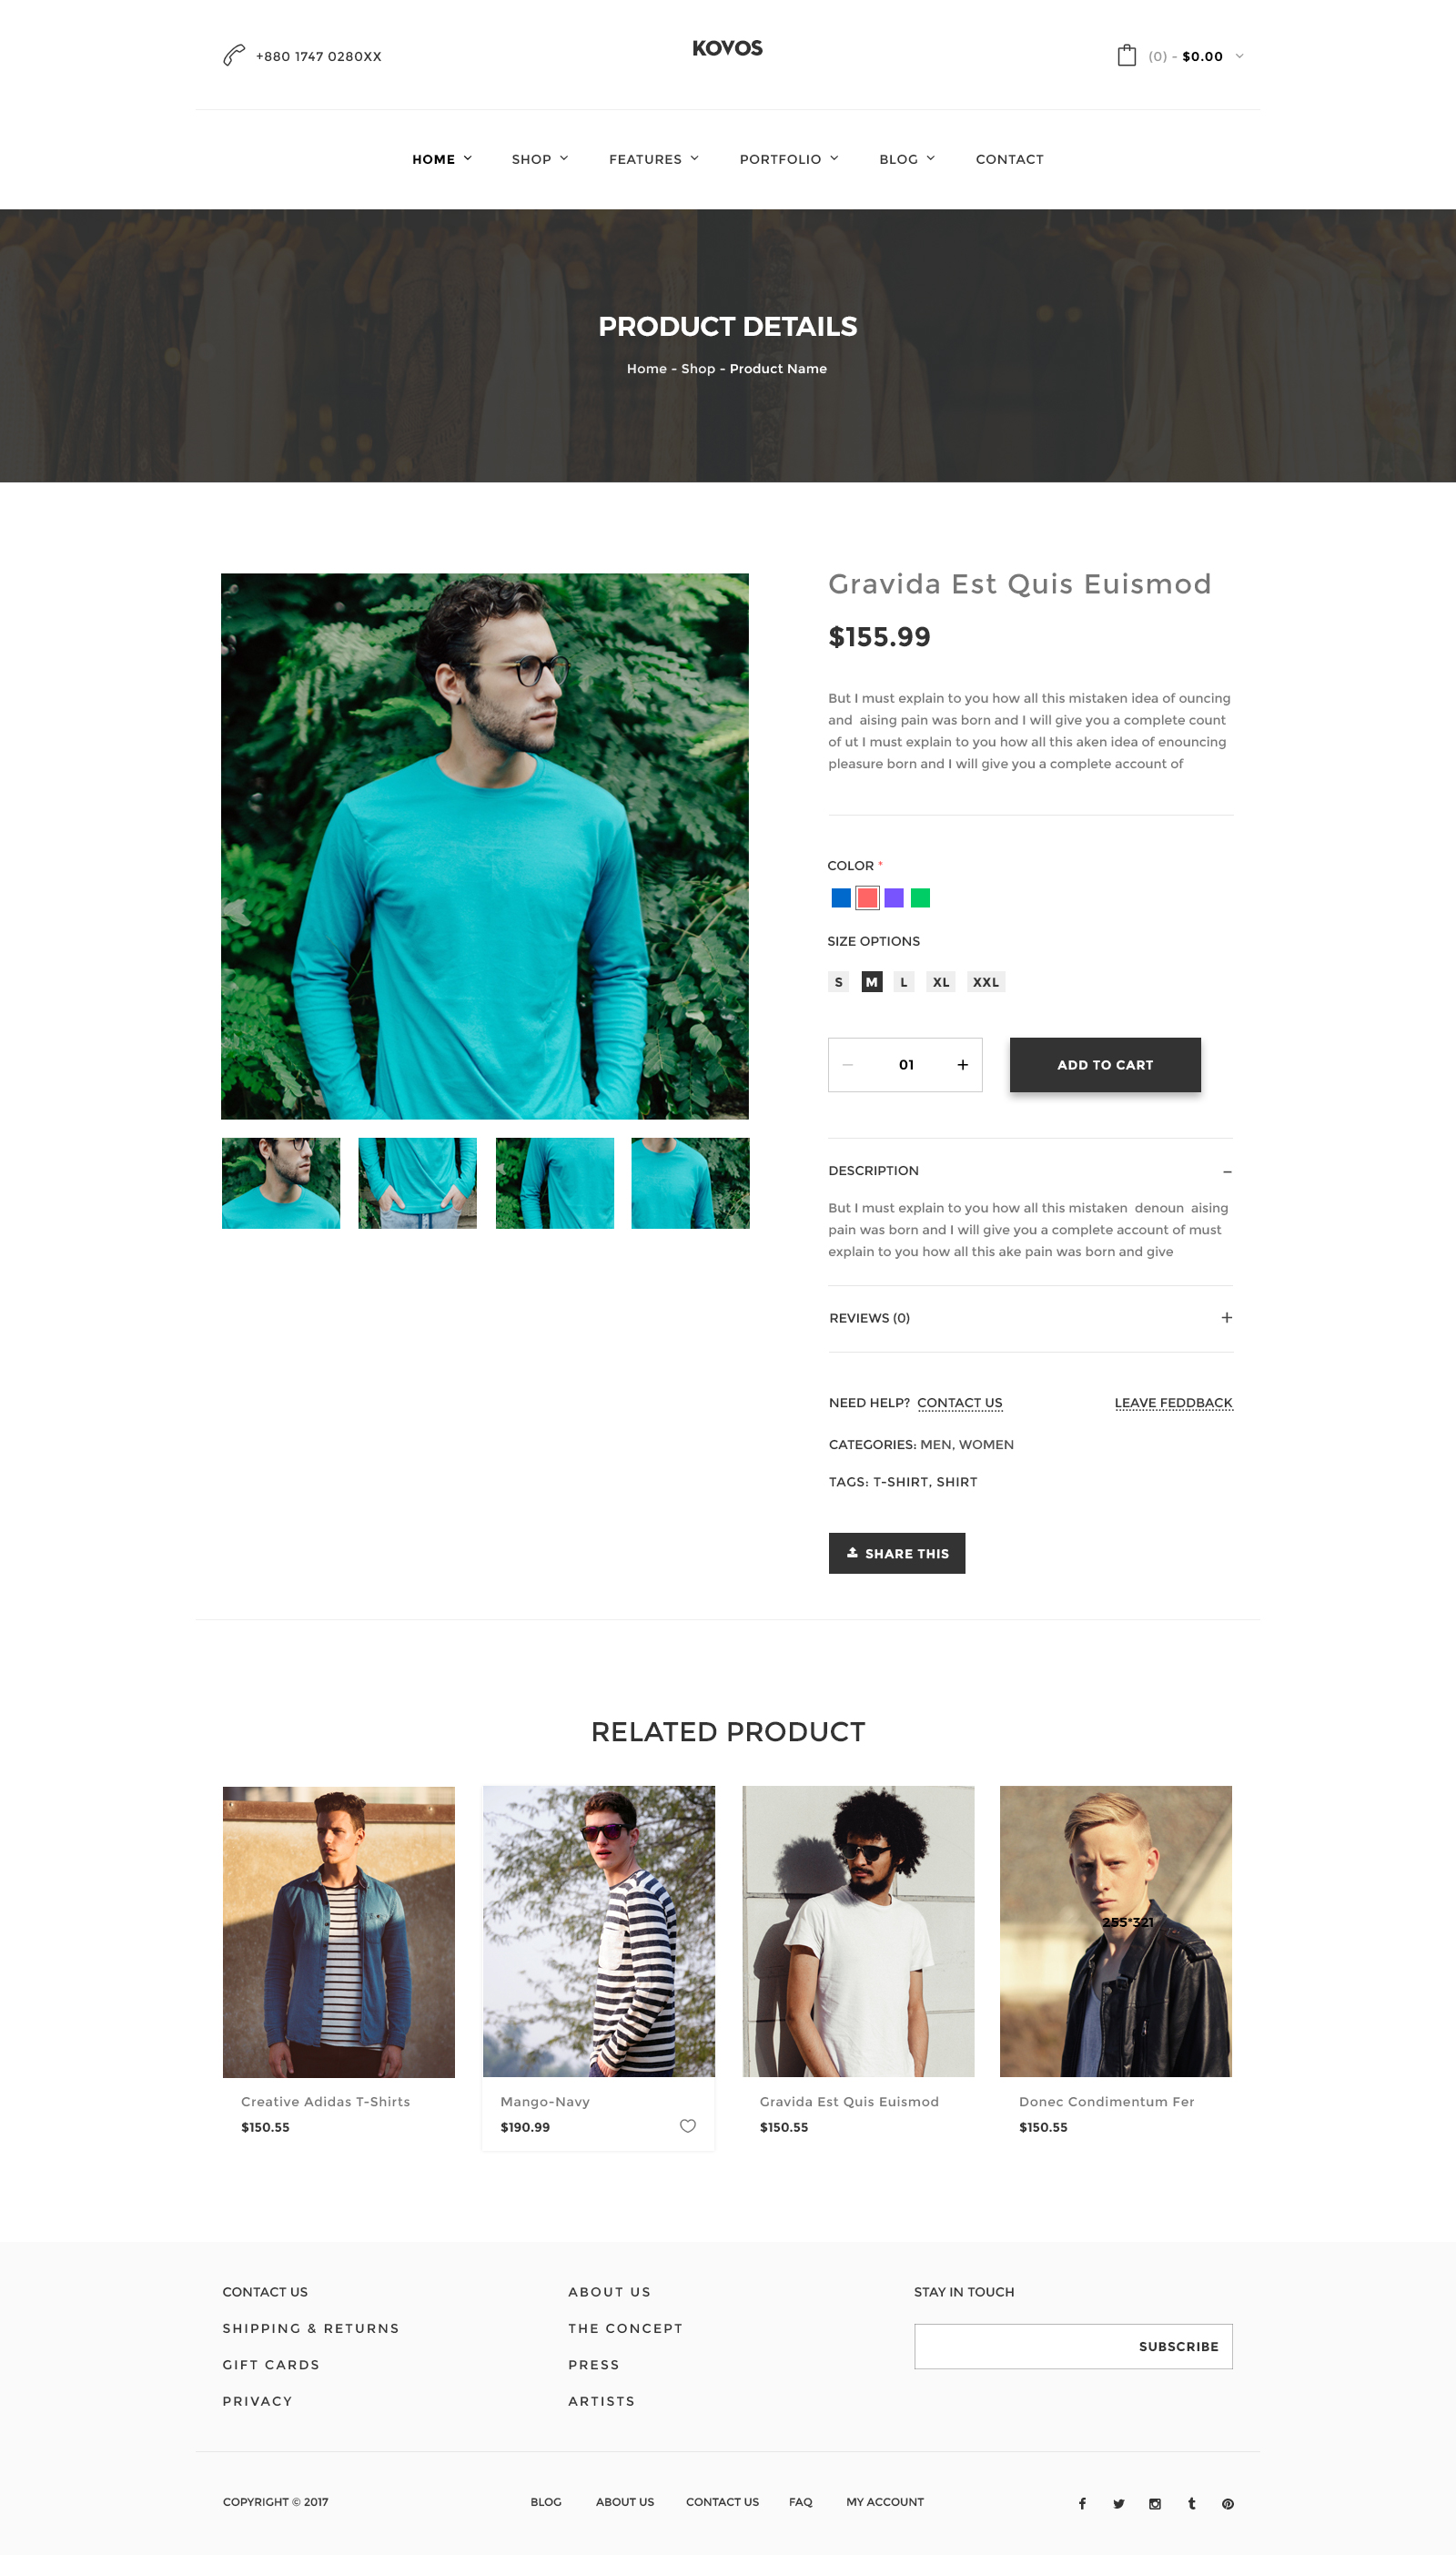 Kovos - The Online Fashion Store PSD Template